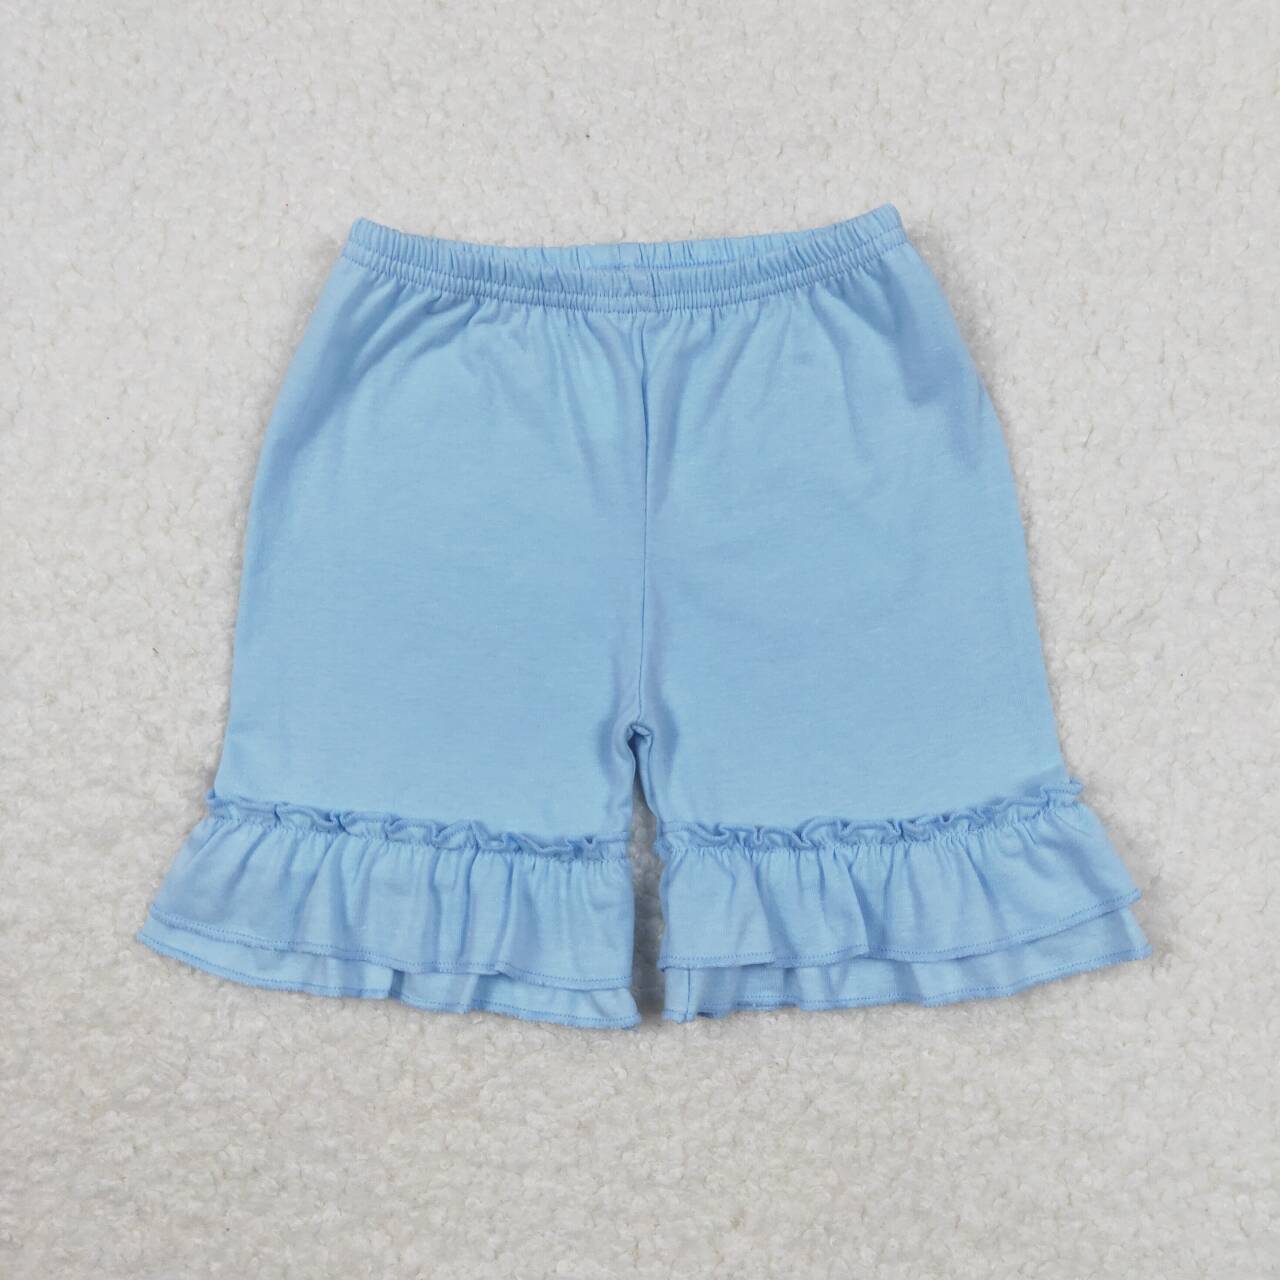 GSSO0635 Cartoon Dog Top Blue Shorts Girls Summer Clothes Set